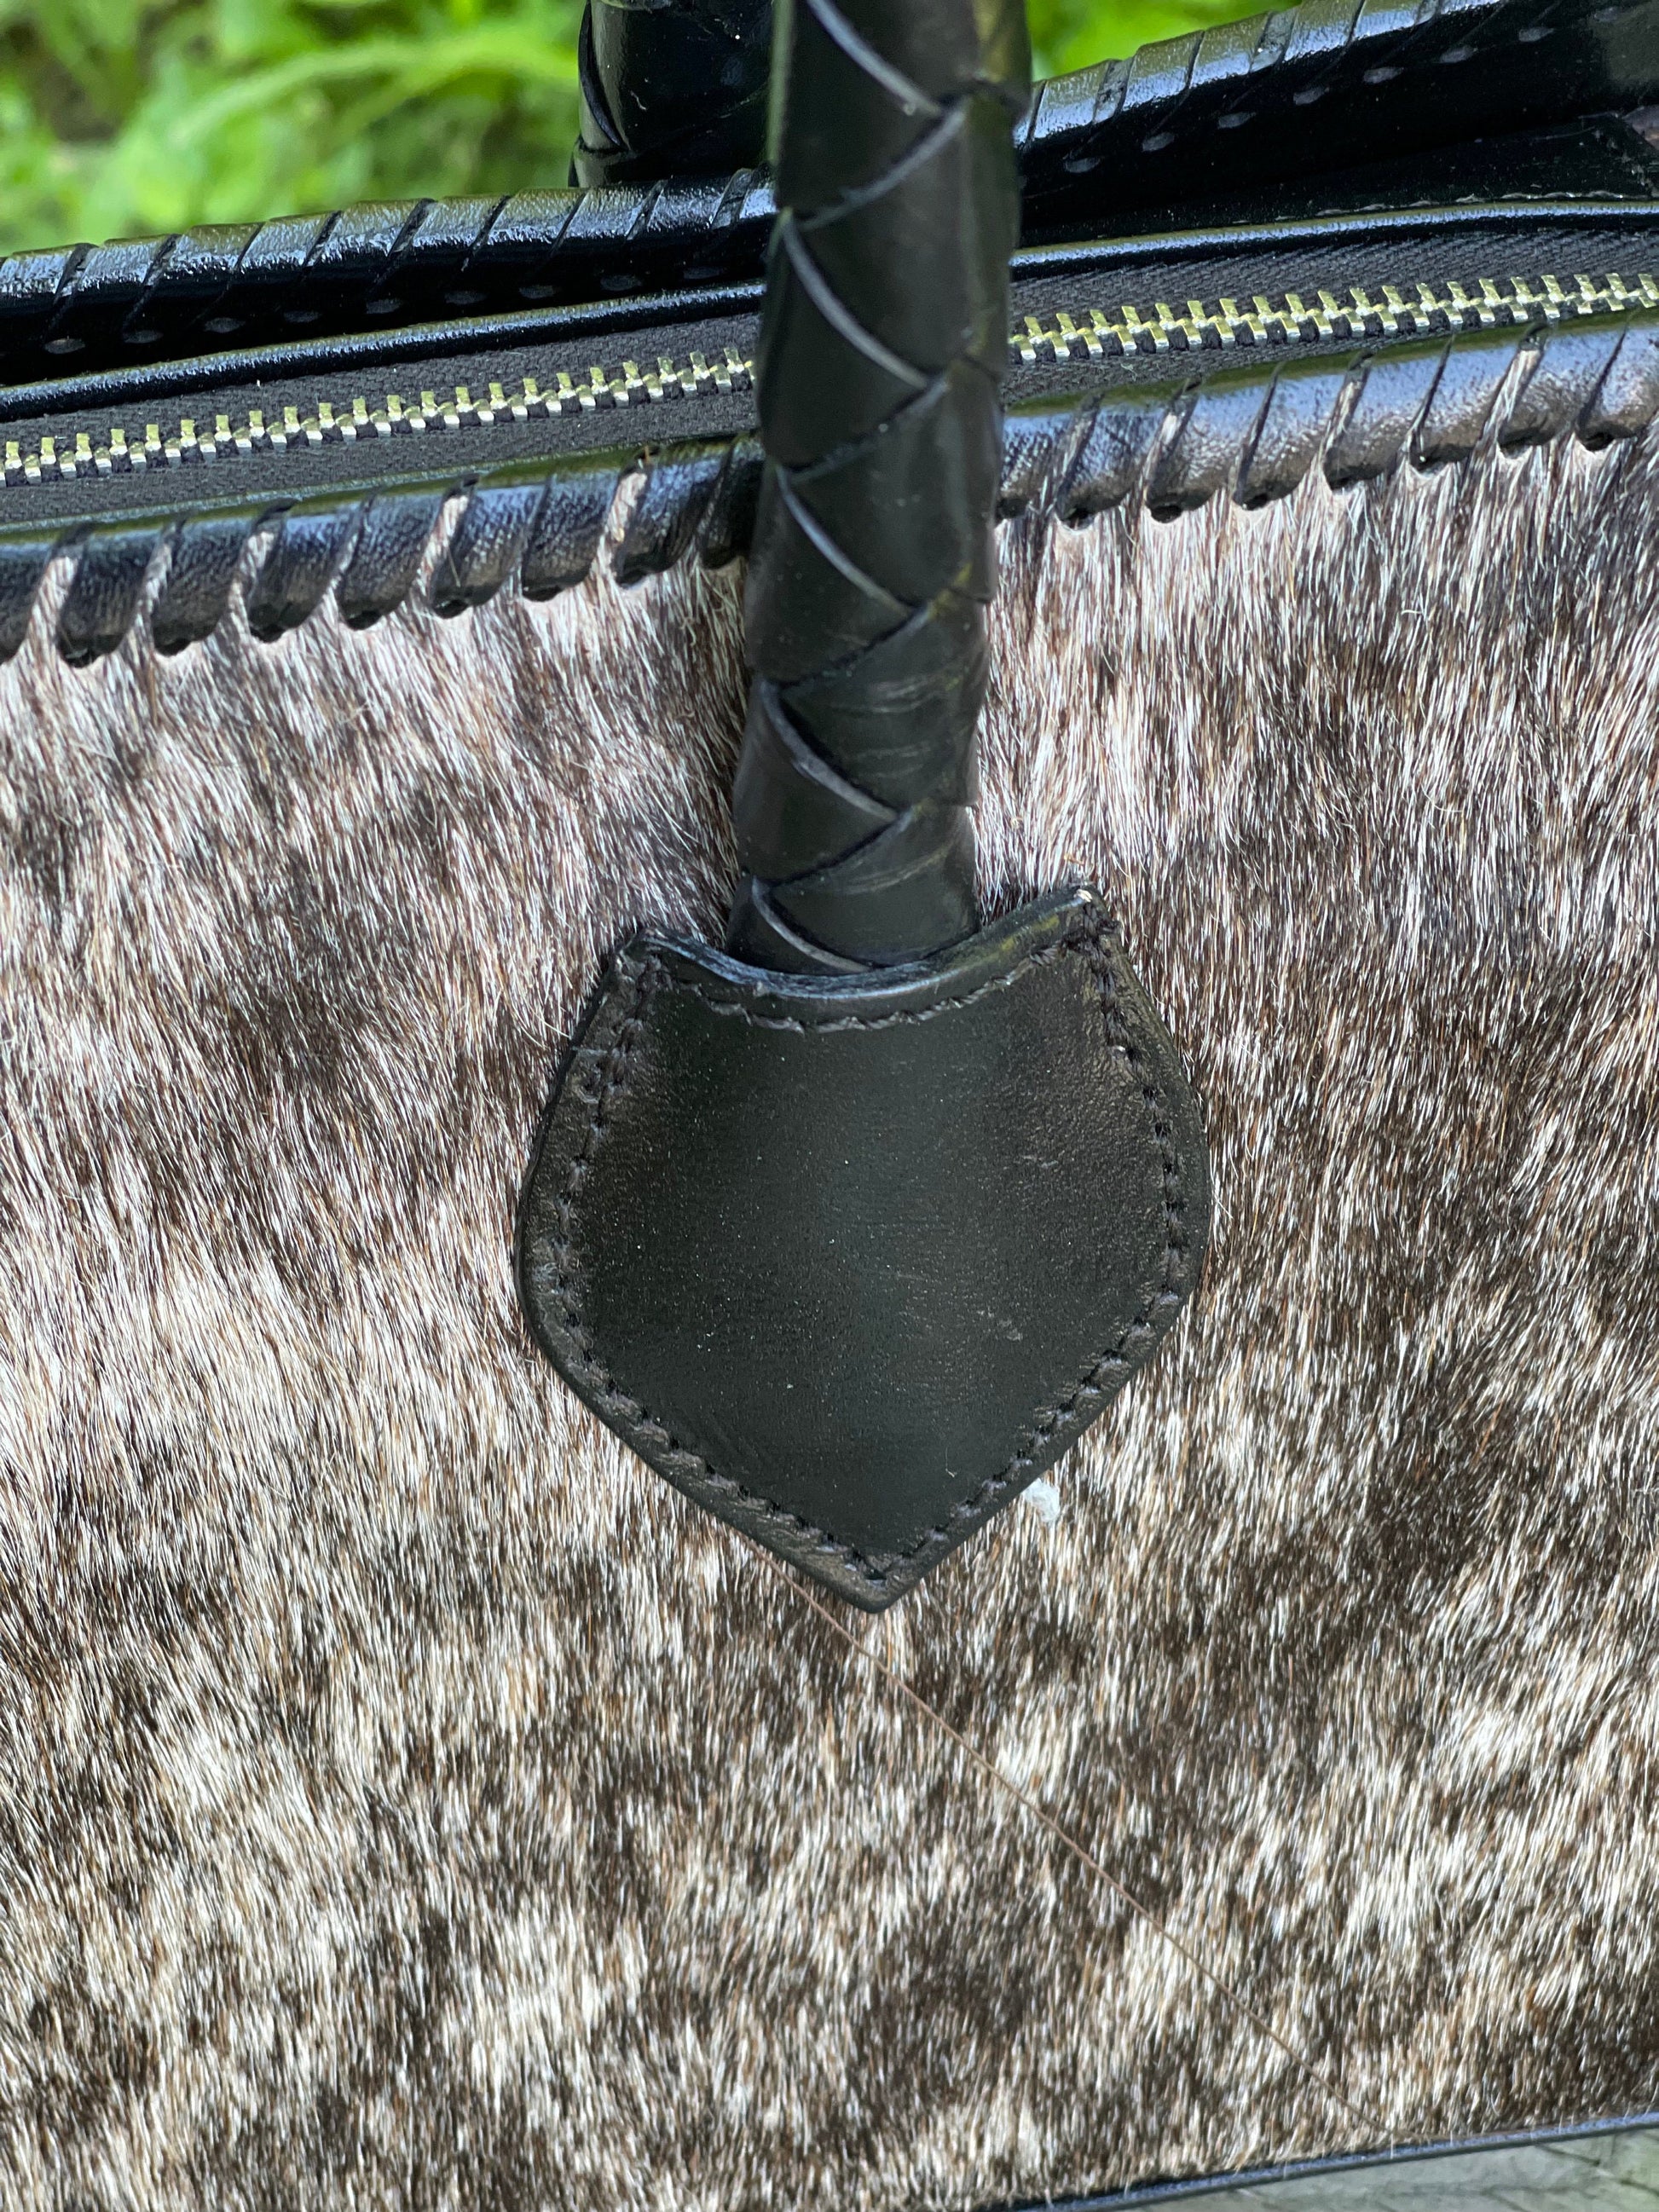 Calf Hair Leather Satchel Bag, "LARGA PELO" by ALLE - ALLE Handbags